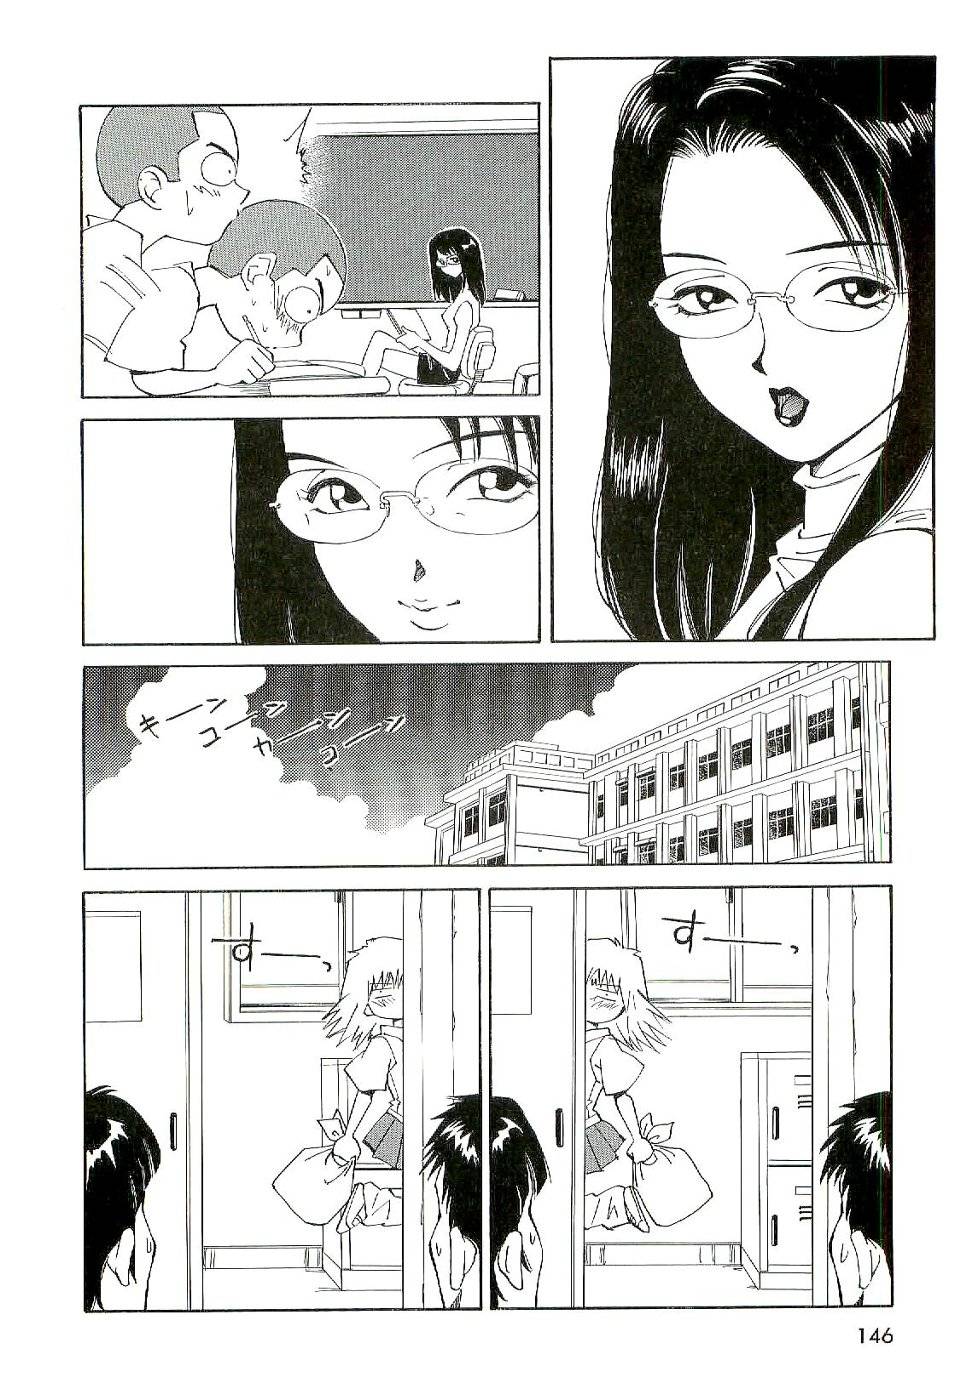 《Karen(日语)》漫画 Karen 01卷